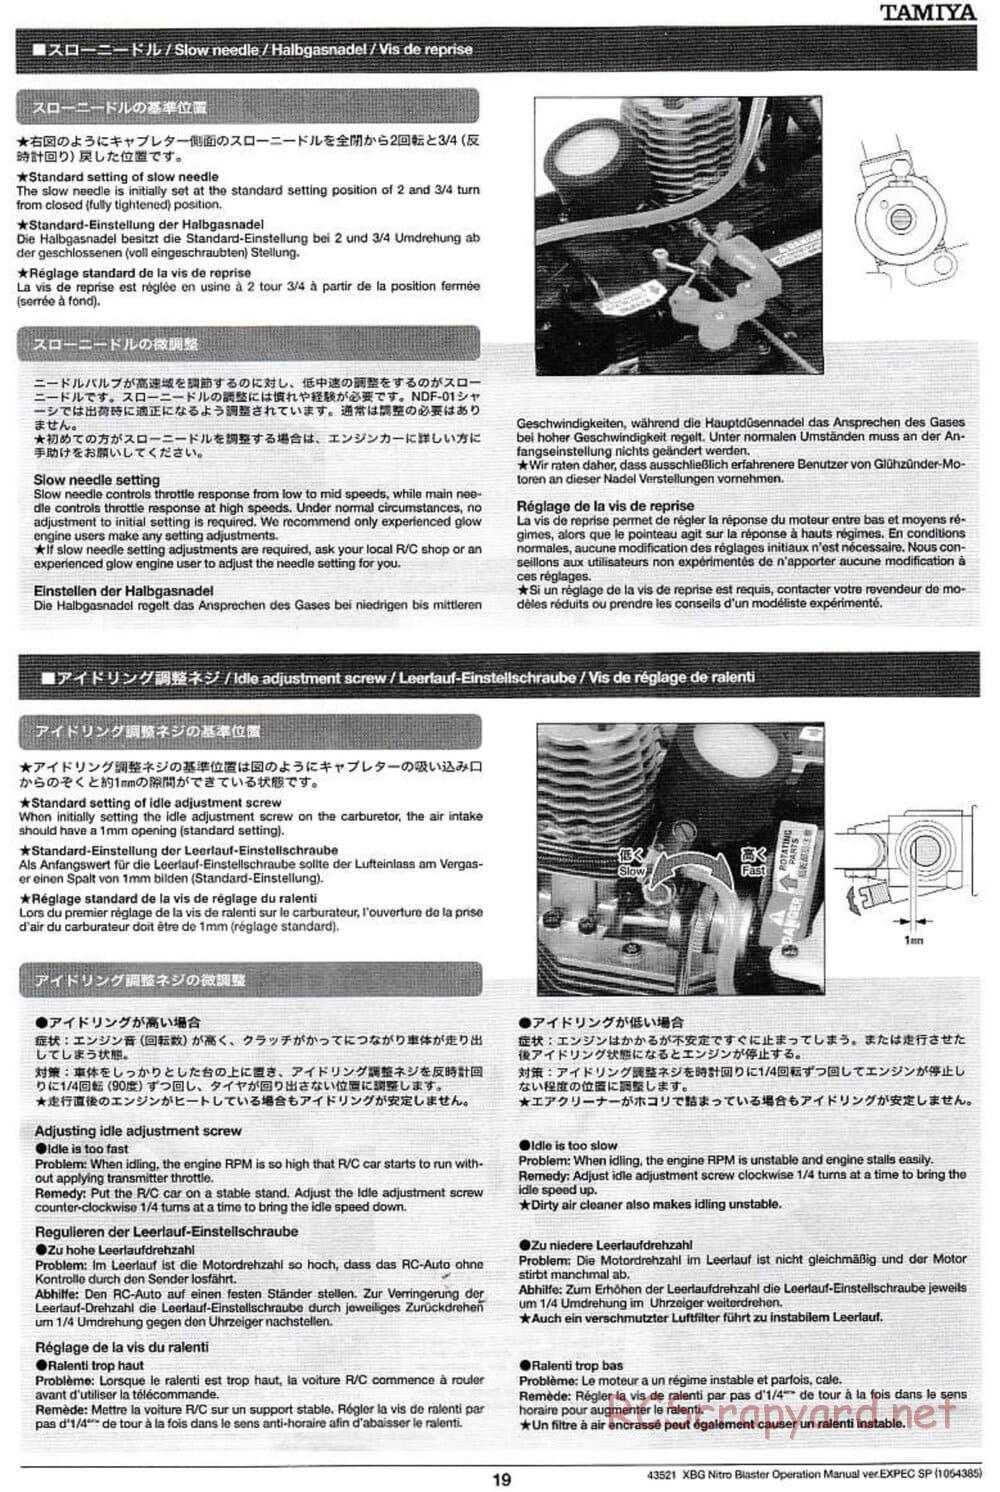 Tamiya - Nitro Blaster - NDF-01 - Operating Manual - Page 19